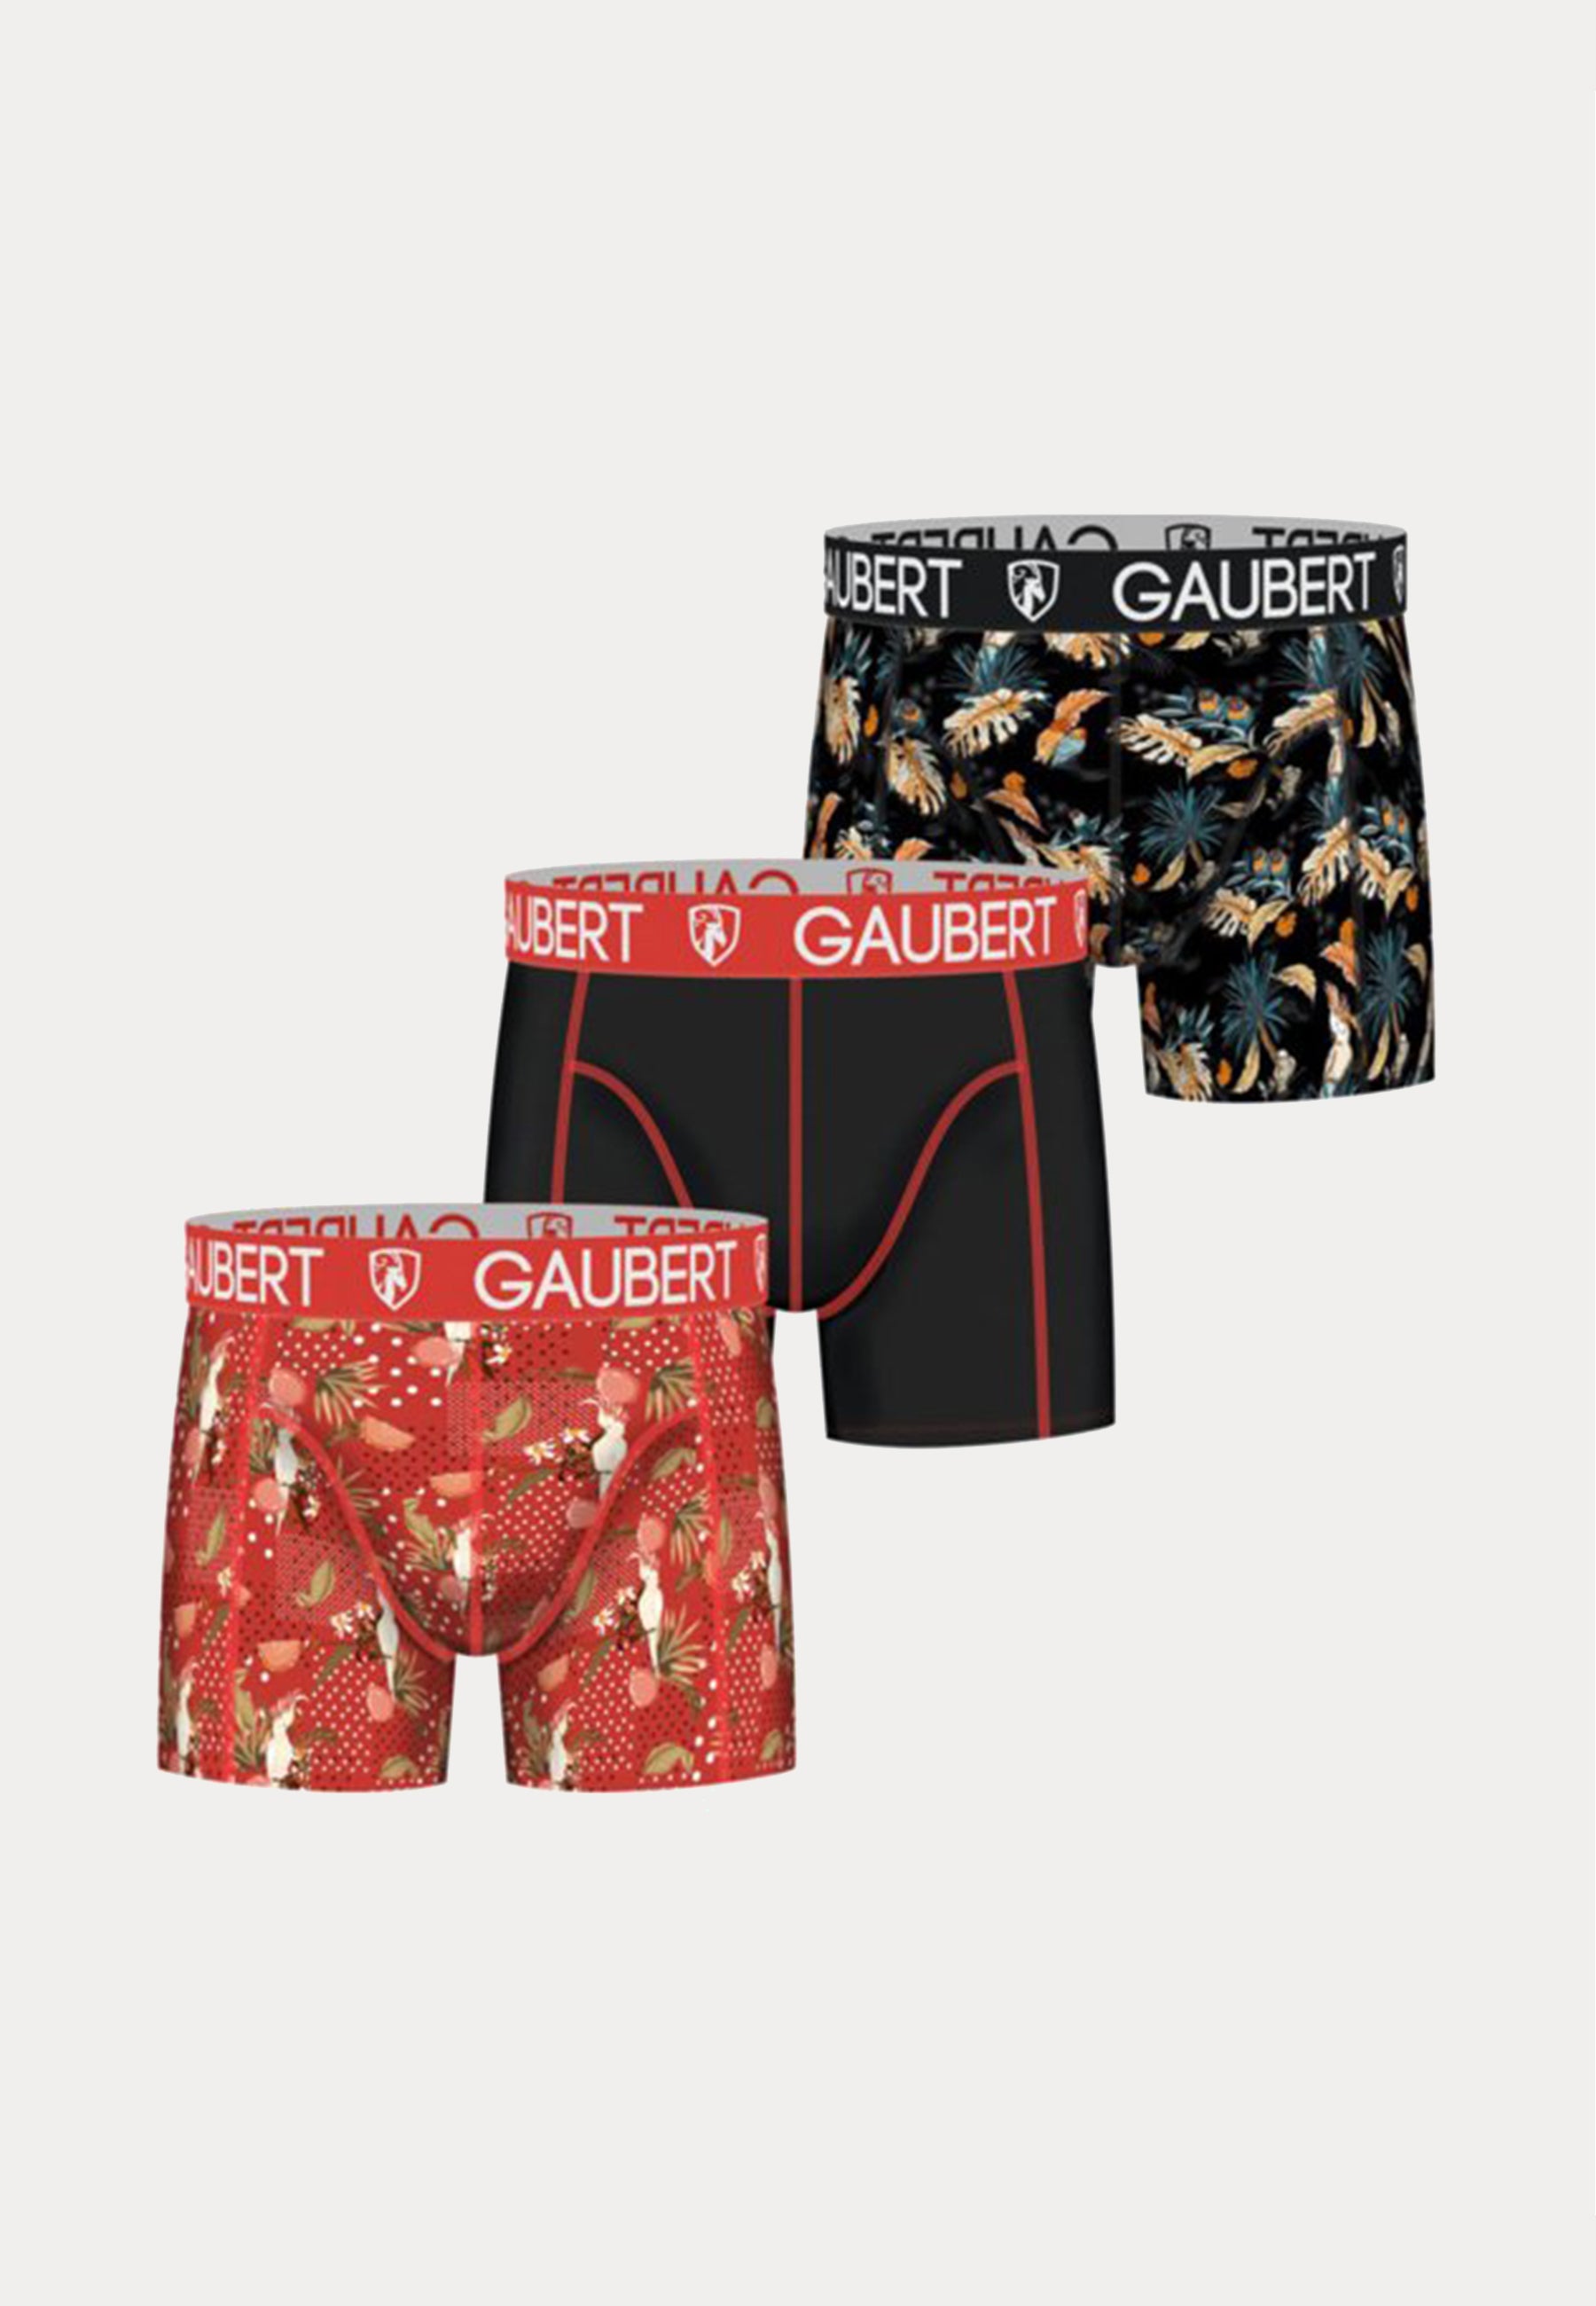 Set van 3 pack katoenen boxershorts waarvan 2 met print.